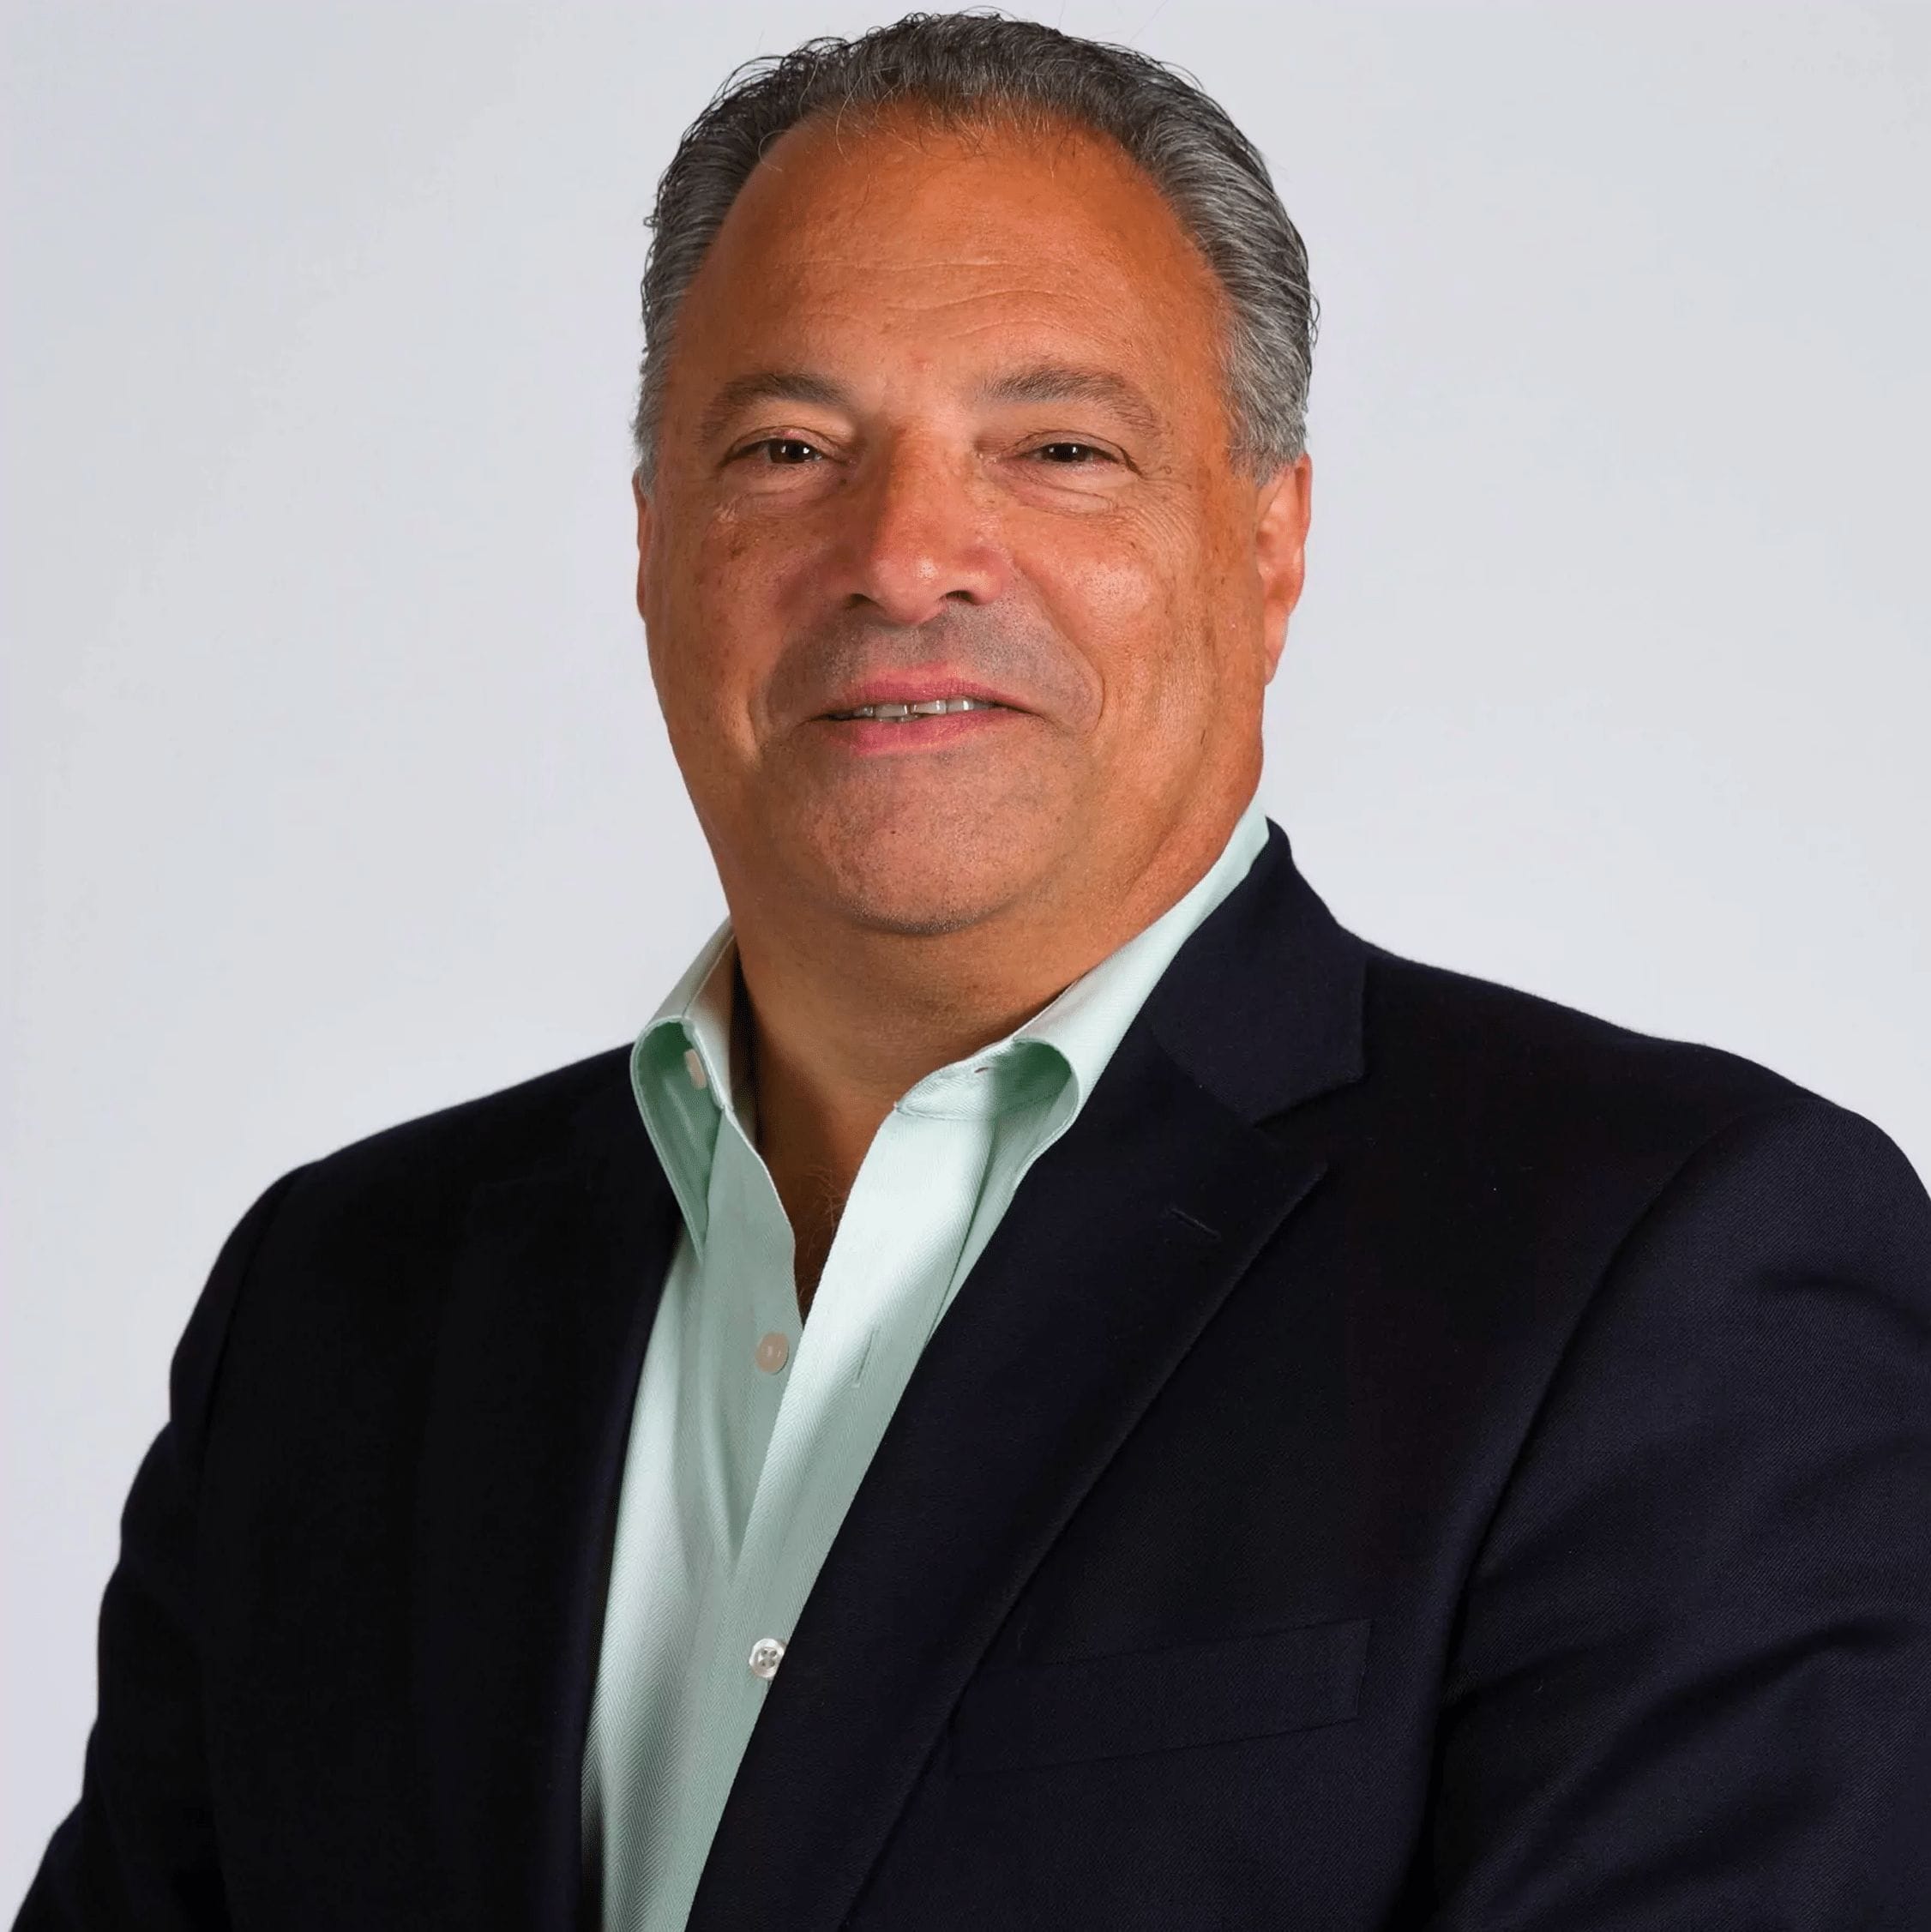 Peter Verlezza | Managing Partner of SMB Networks, LLC